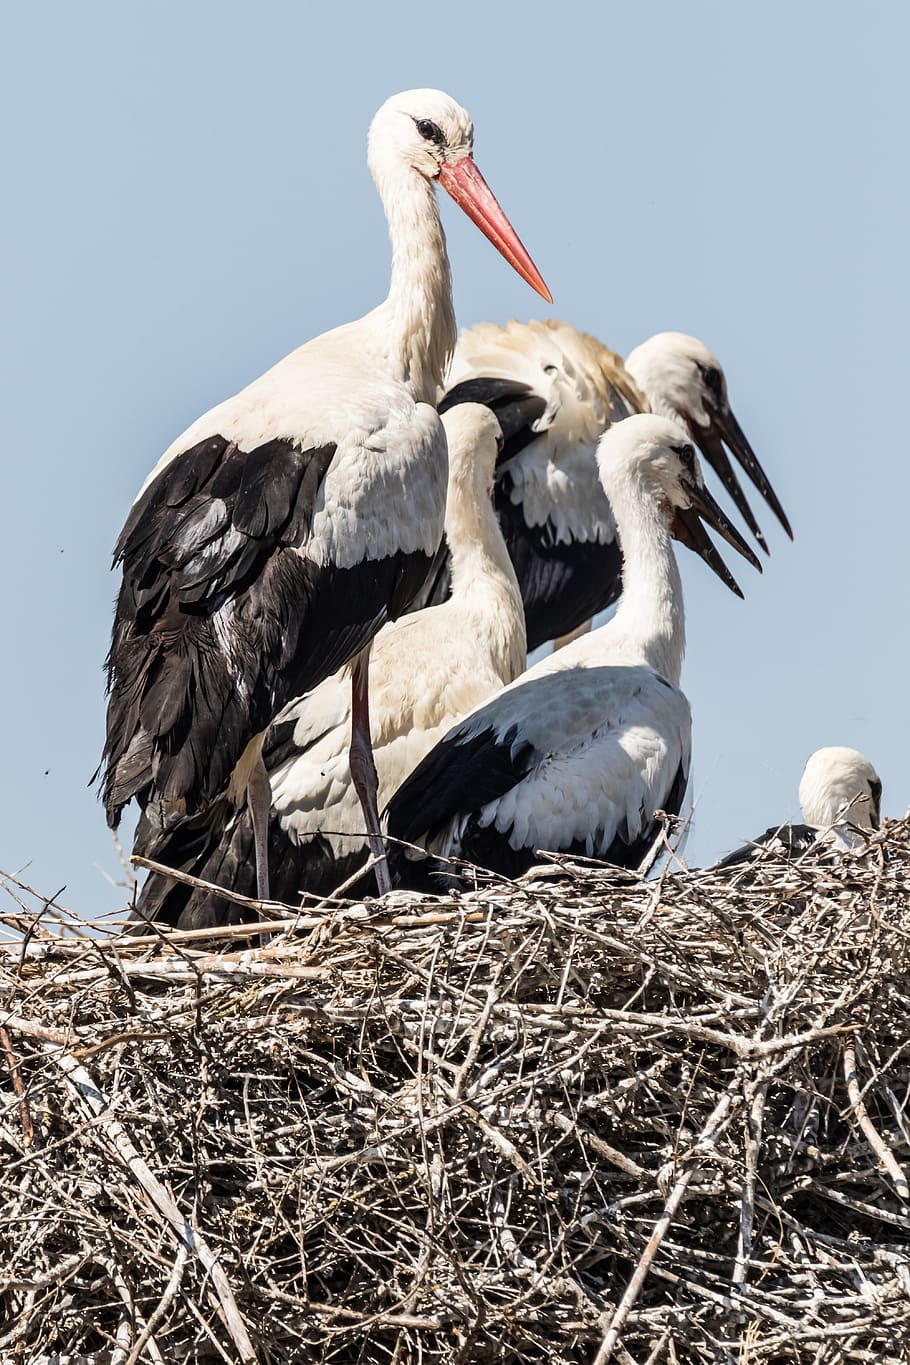 la familia, spain, huelva, white stork, birding, stork, wildlife, nature, animal, nesting